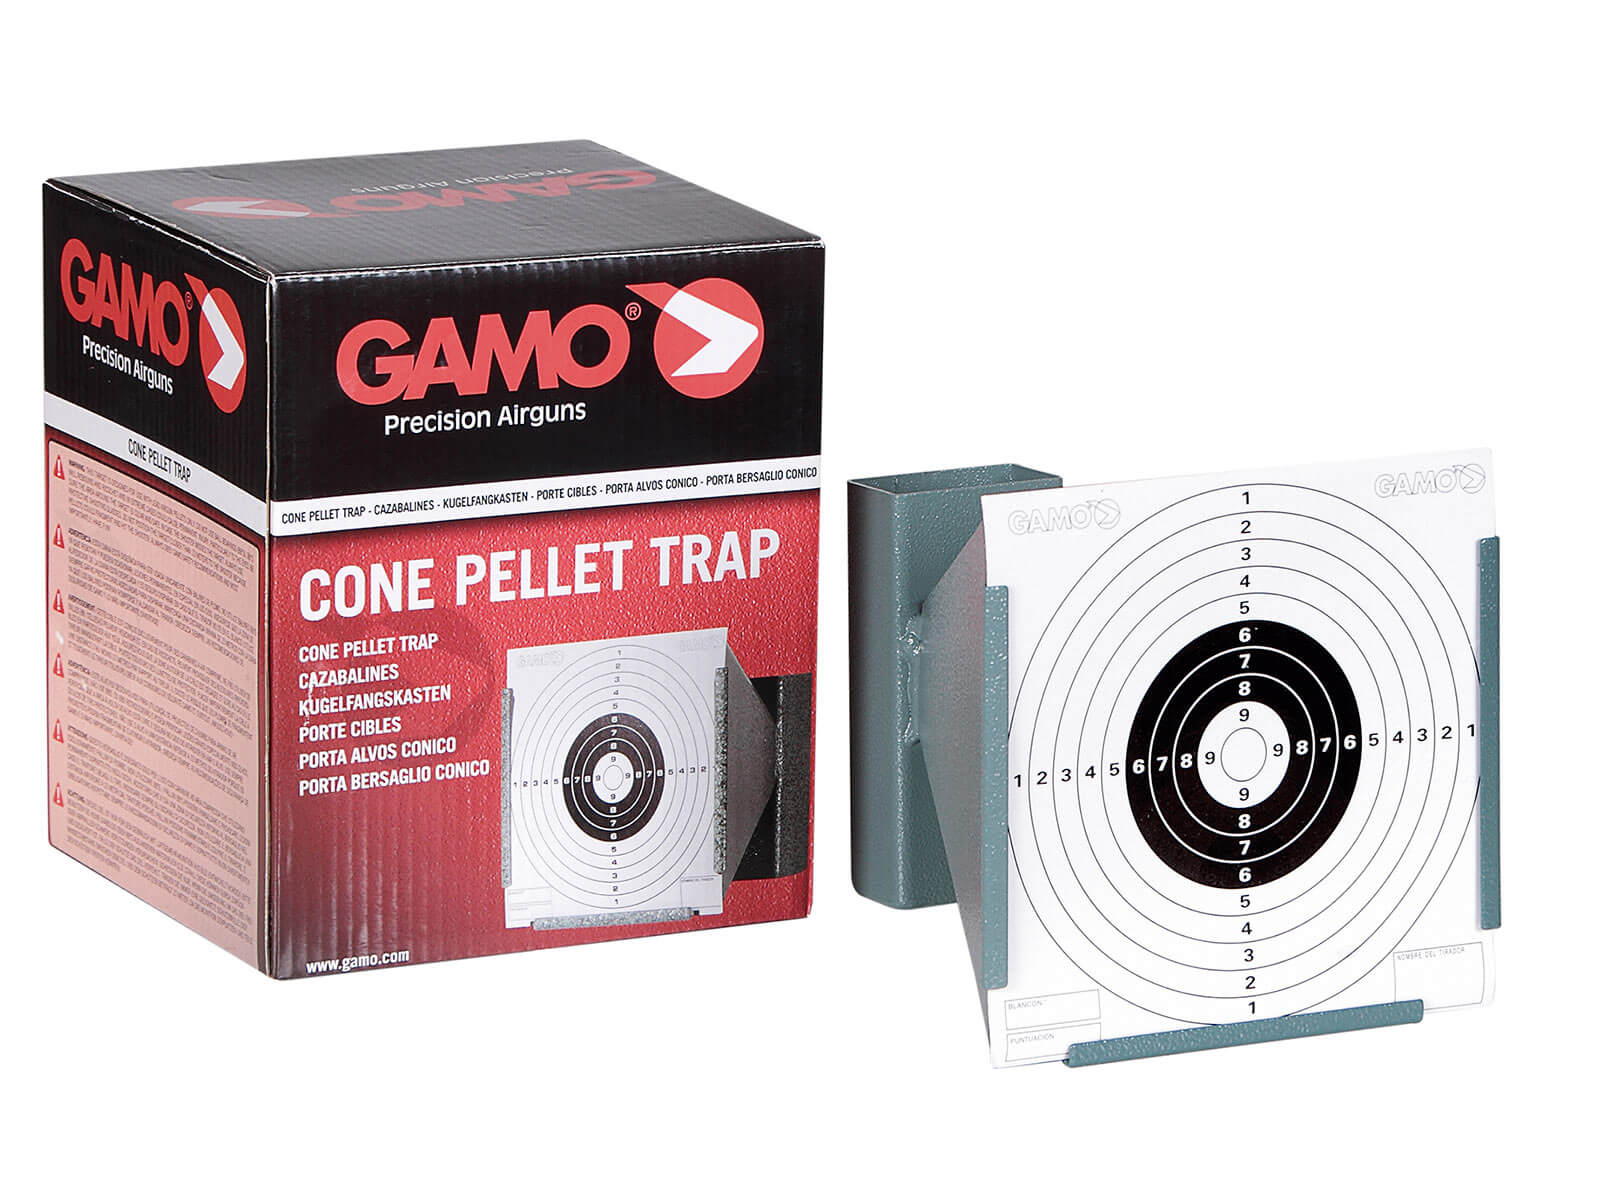 Gamo GAMO ROCKER PELLET TRAP TARGET PRECISION AIRGUNS 20001-499 IN ORIGINAL BOX GREEN 